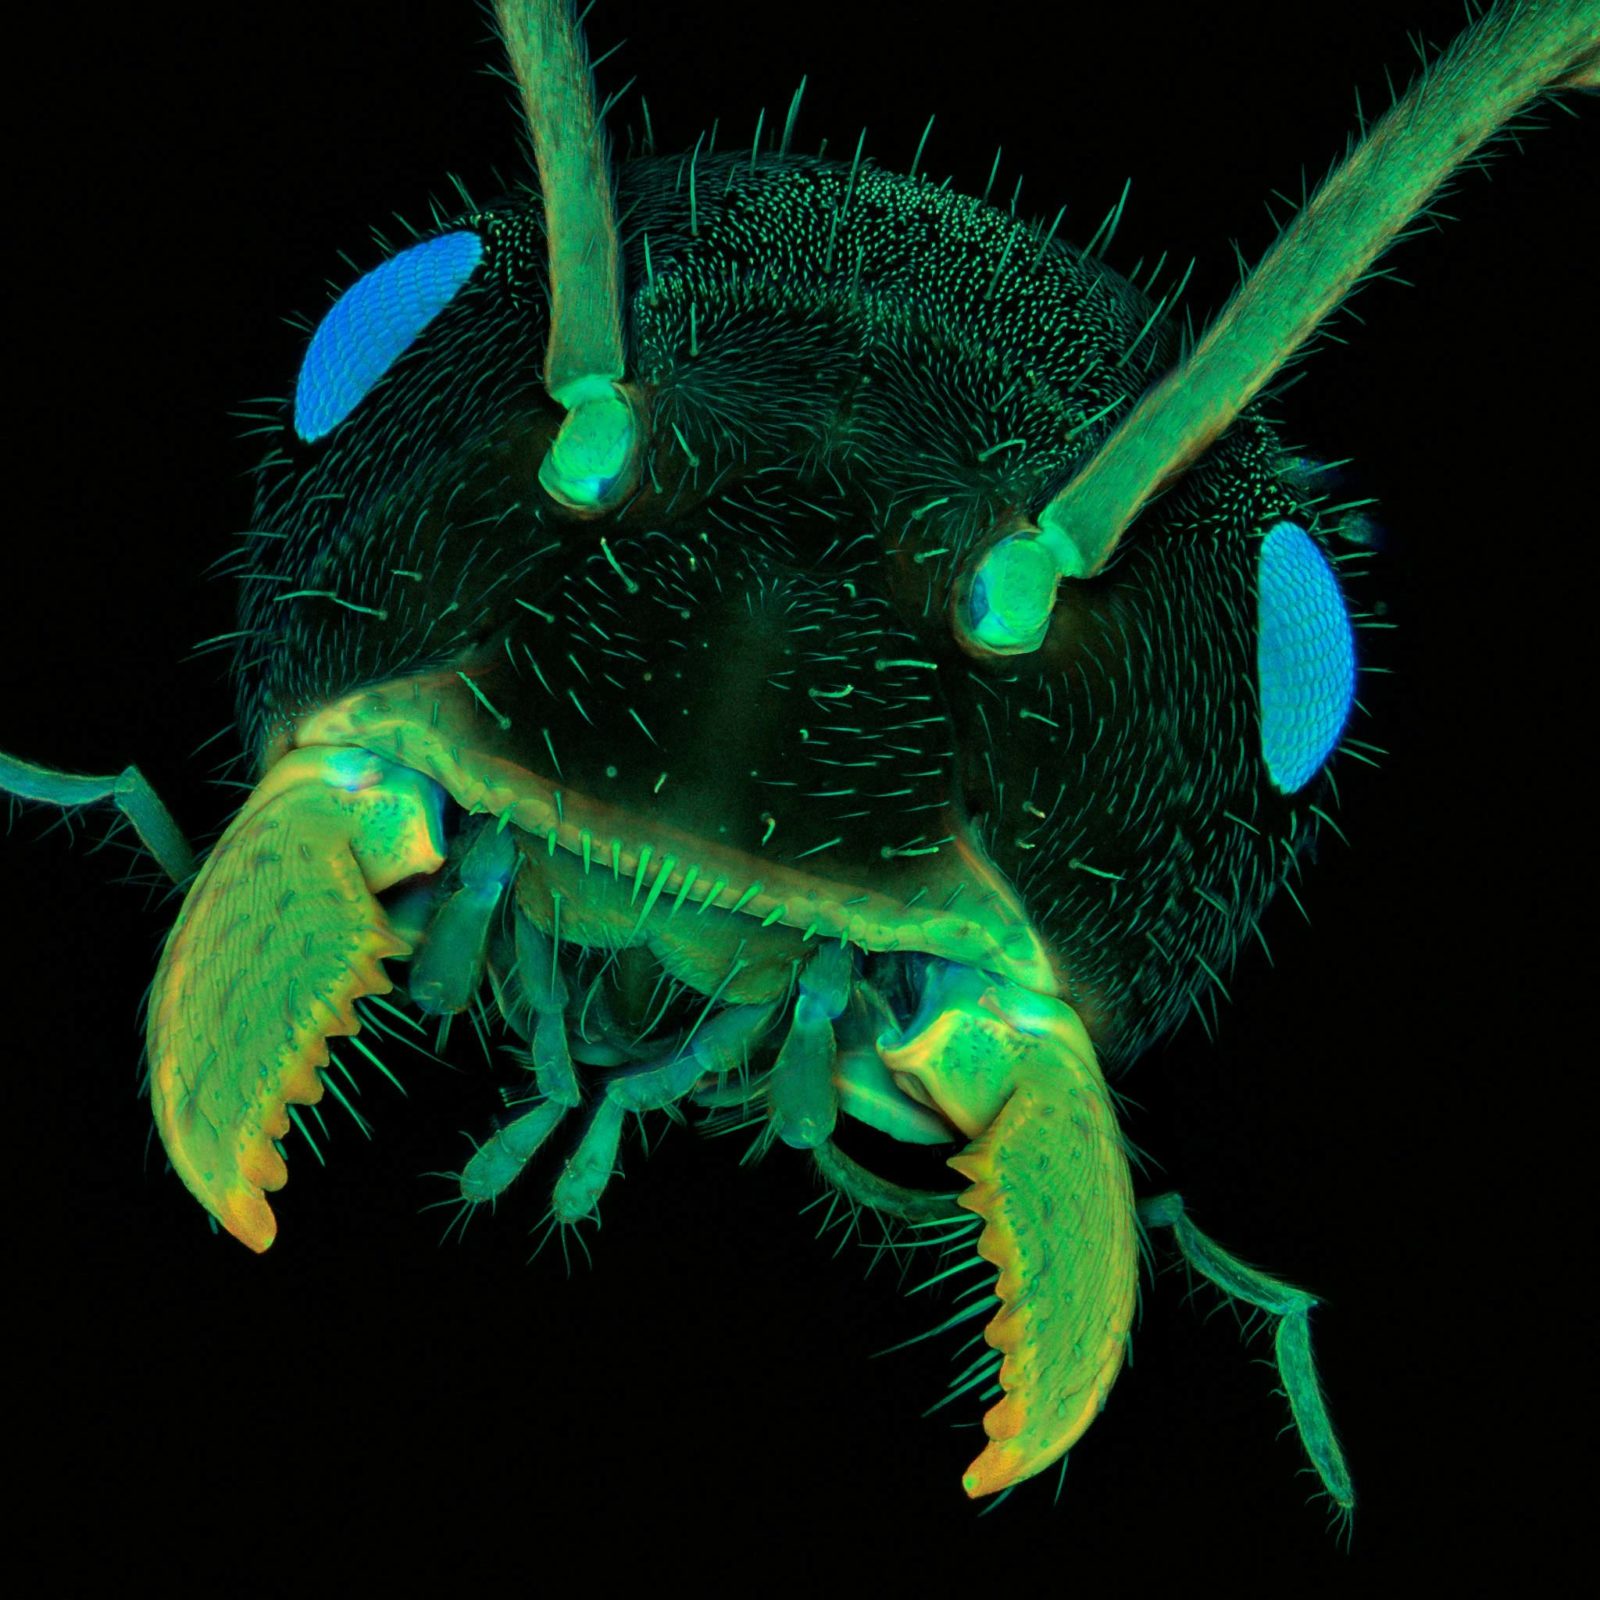 Фотография микро. Nikon small World Photomicrography. Микрофотографии насекомых. Мошка под микроскопом. Микромир насекомые под микроскопом.